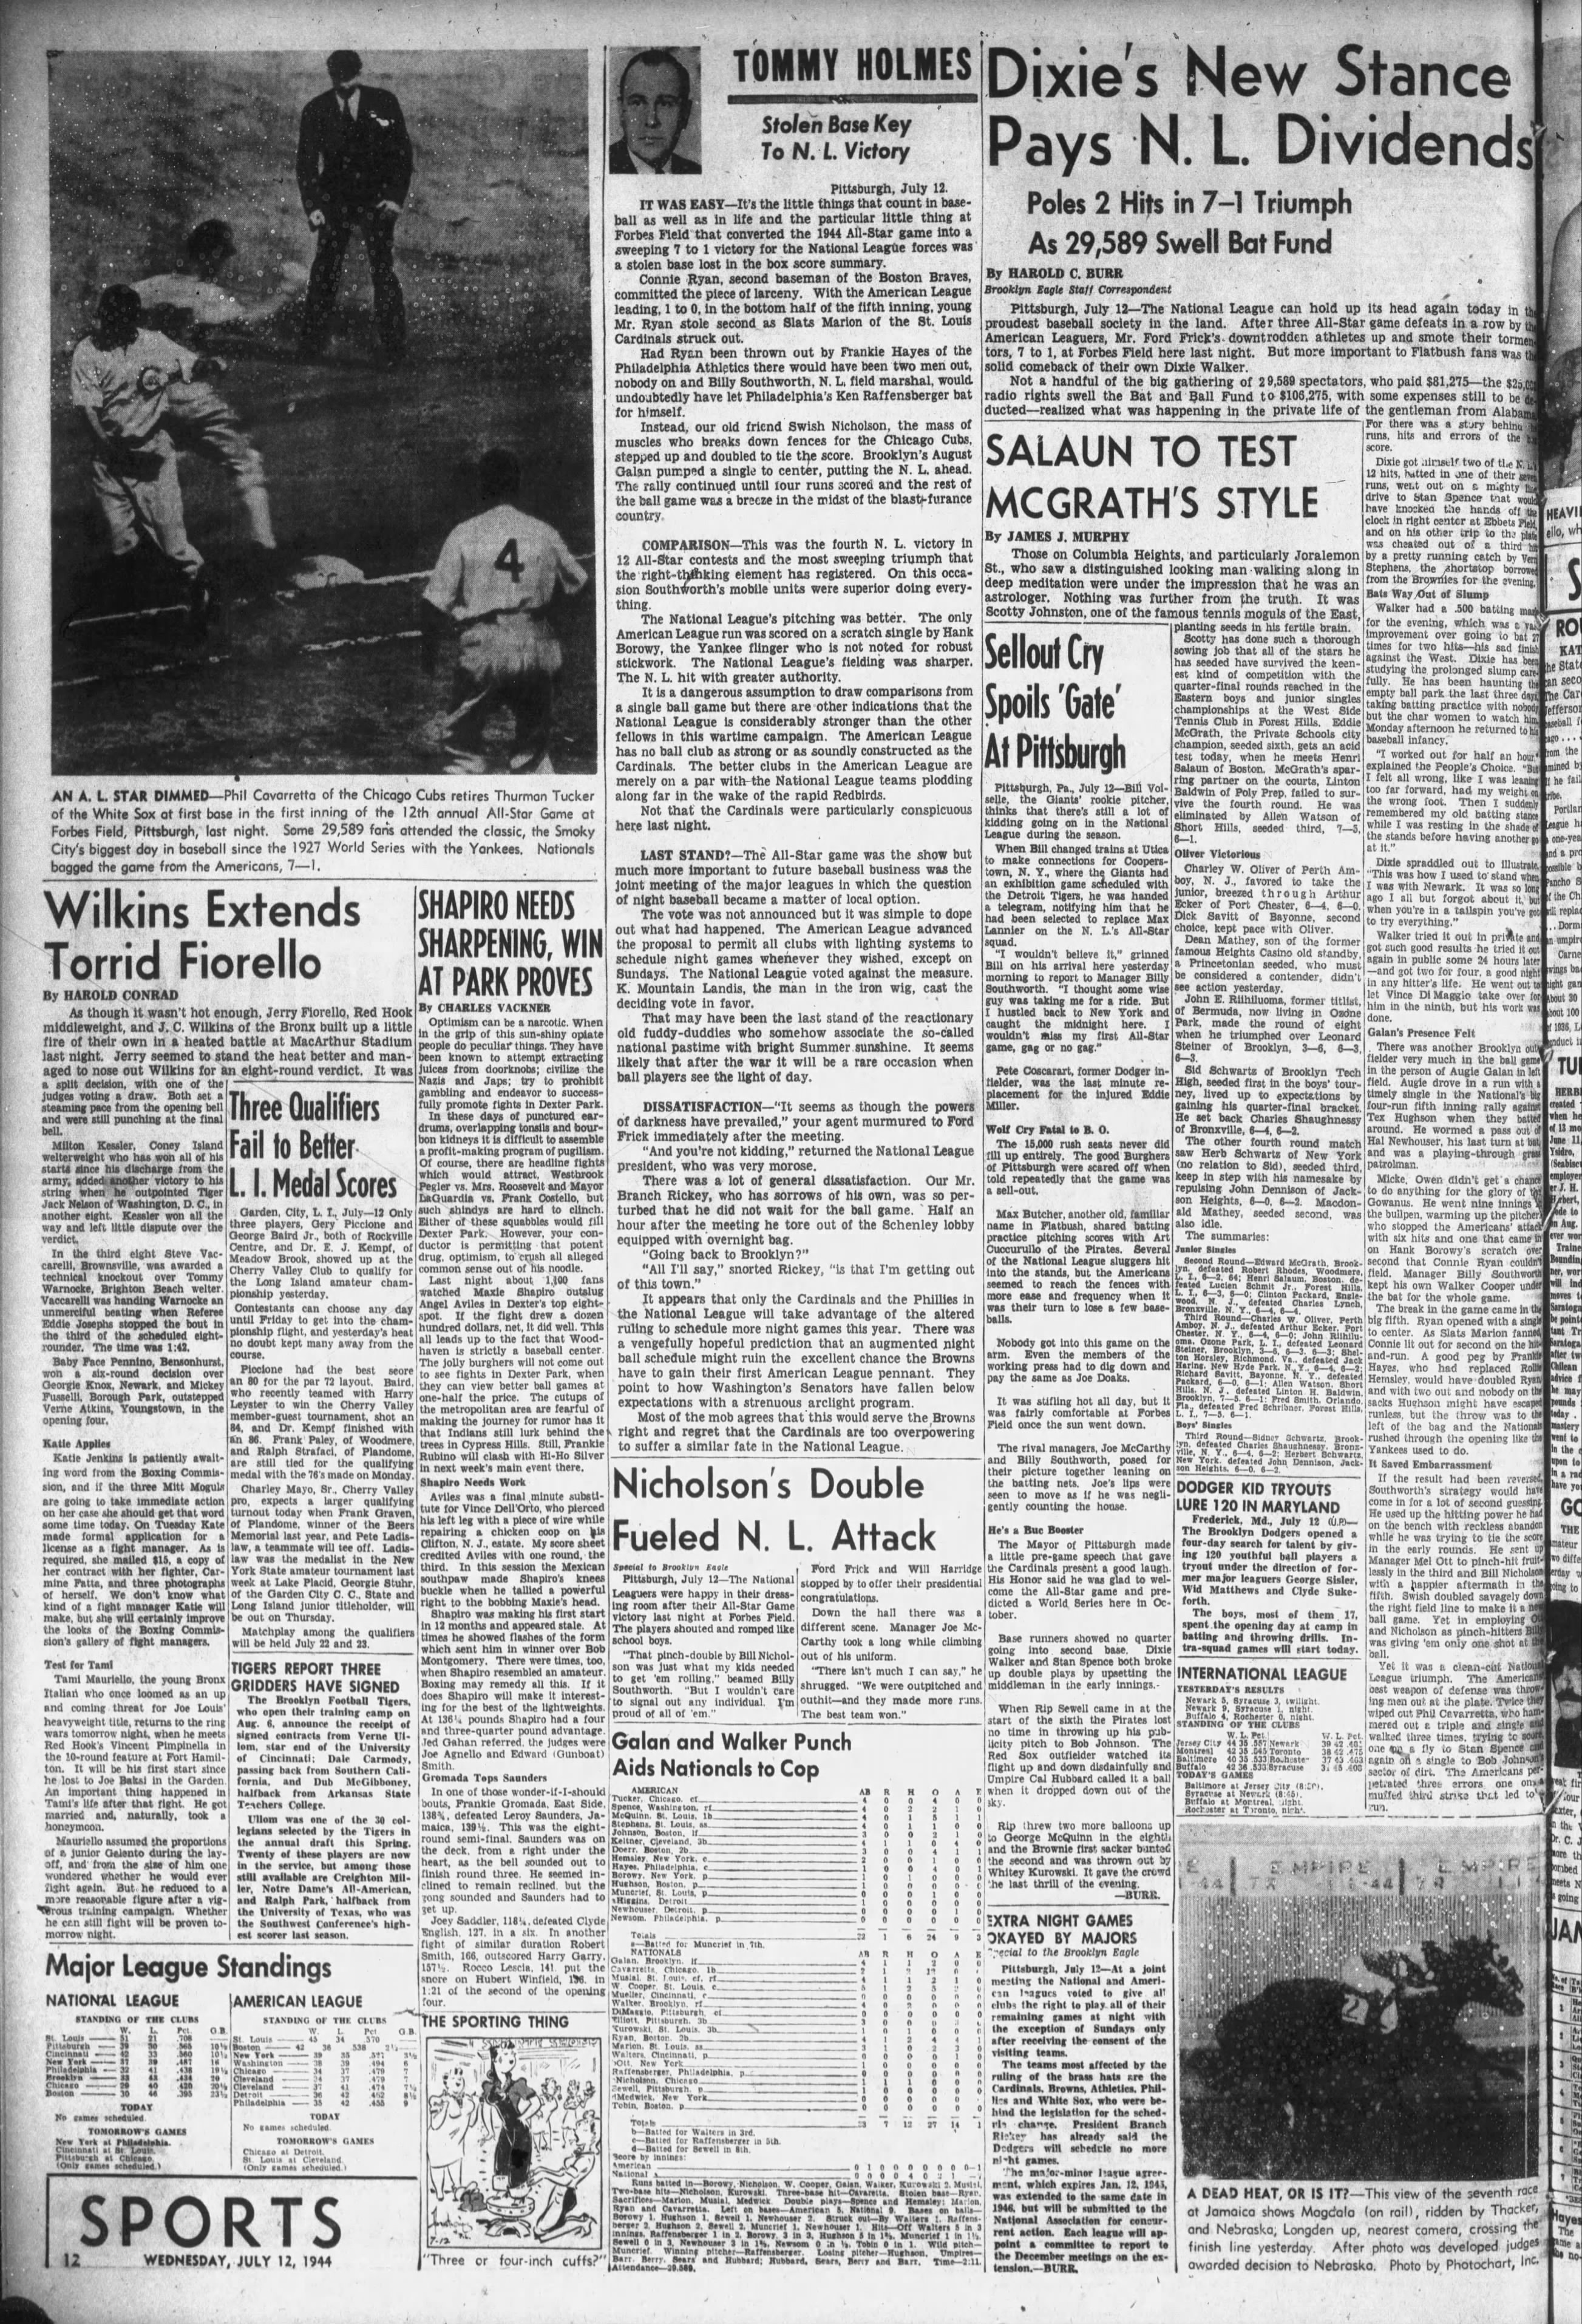 The_Brooklyn_Daily_Eagle_1944_07_12_12.jpg